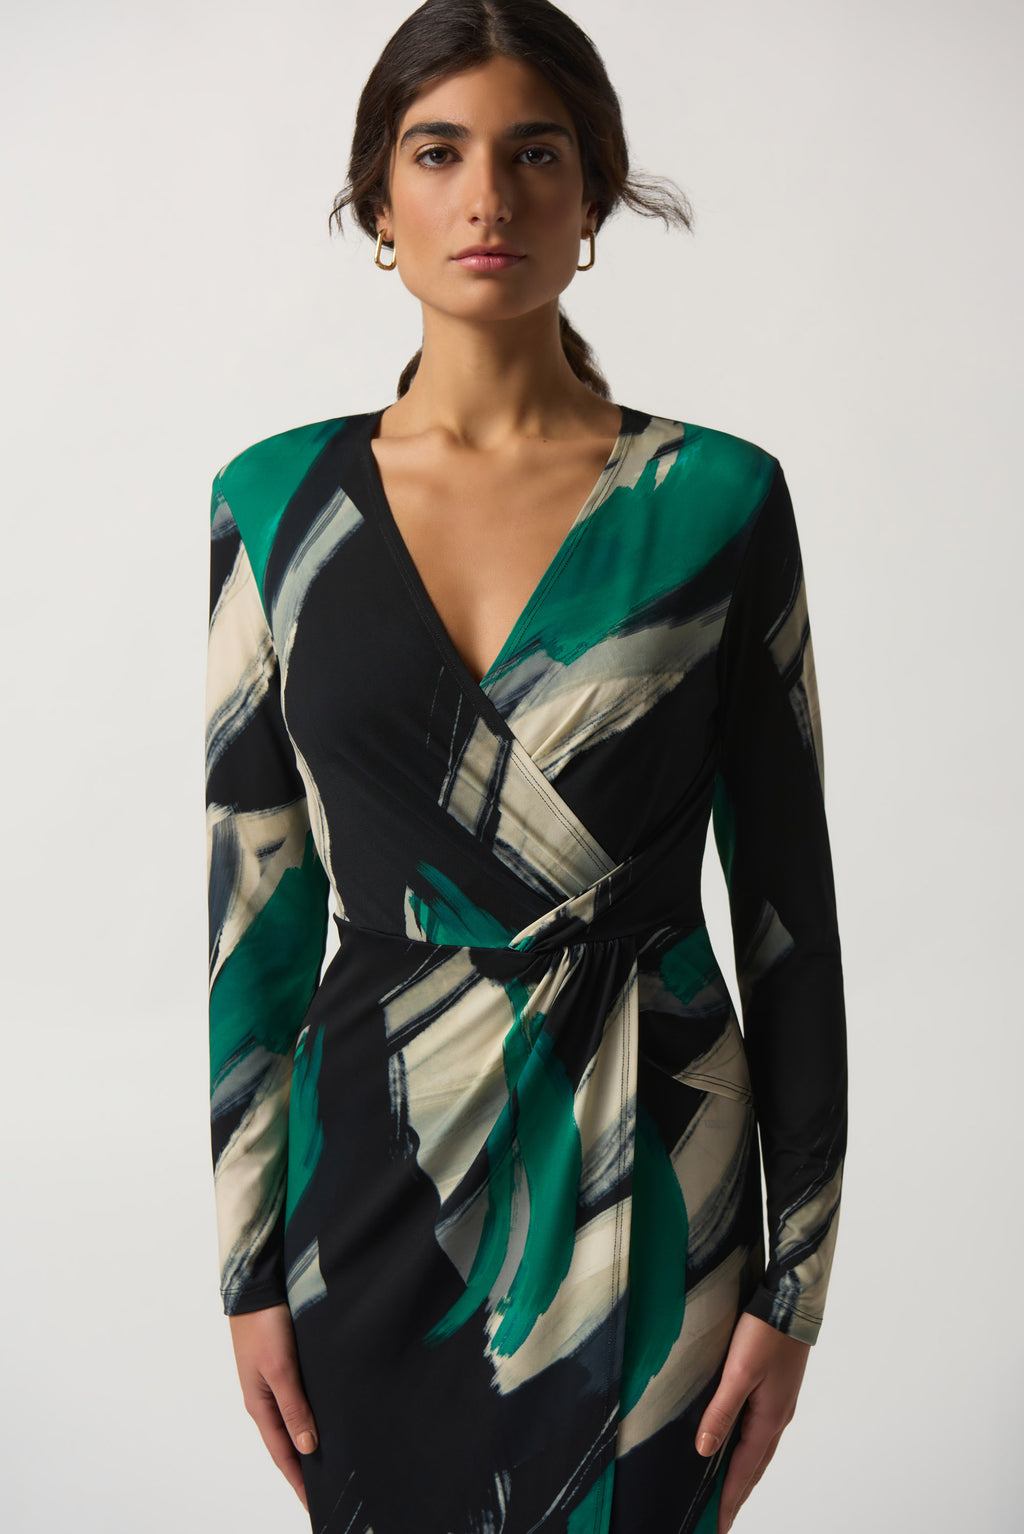 Joseph Ribkoff Black/Multi Abstract Print Wrap Dress Style 233127